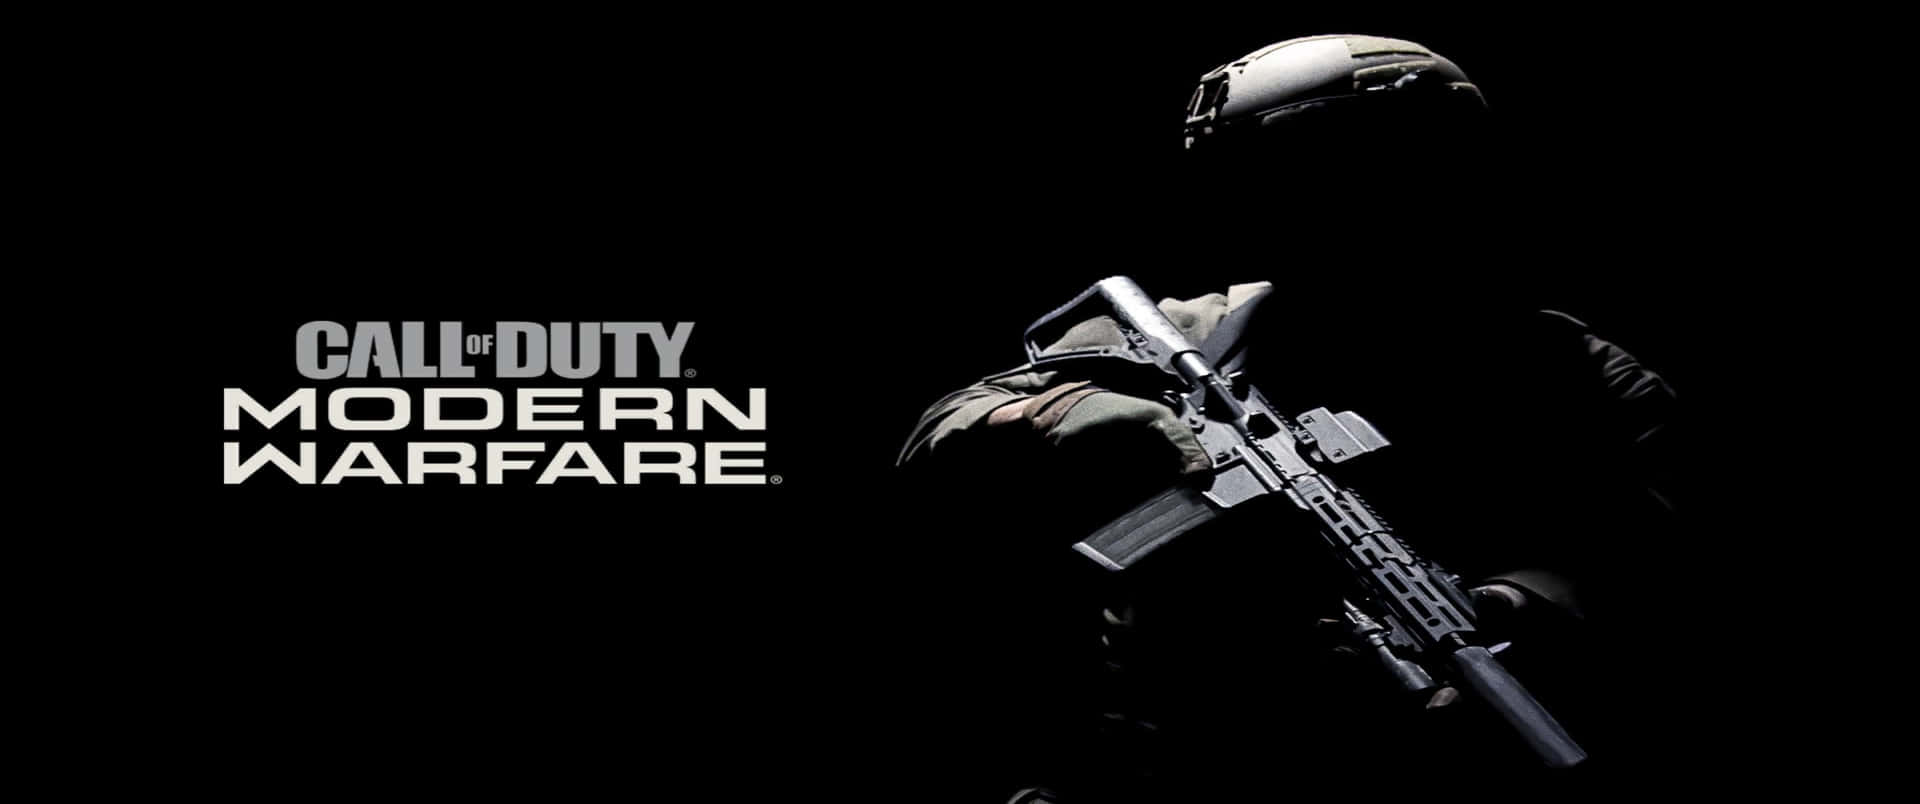 3440x1440p Call Of Duty Modern Warfare Background Wallpaper